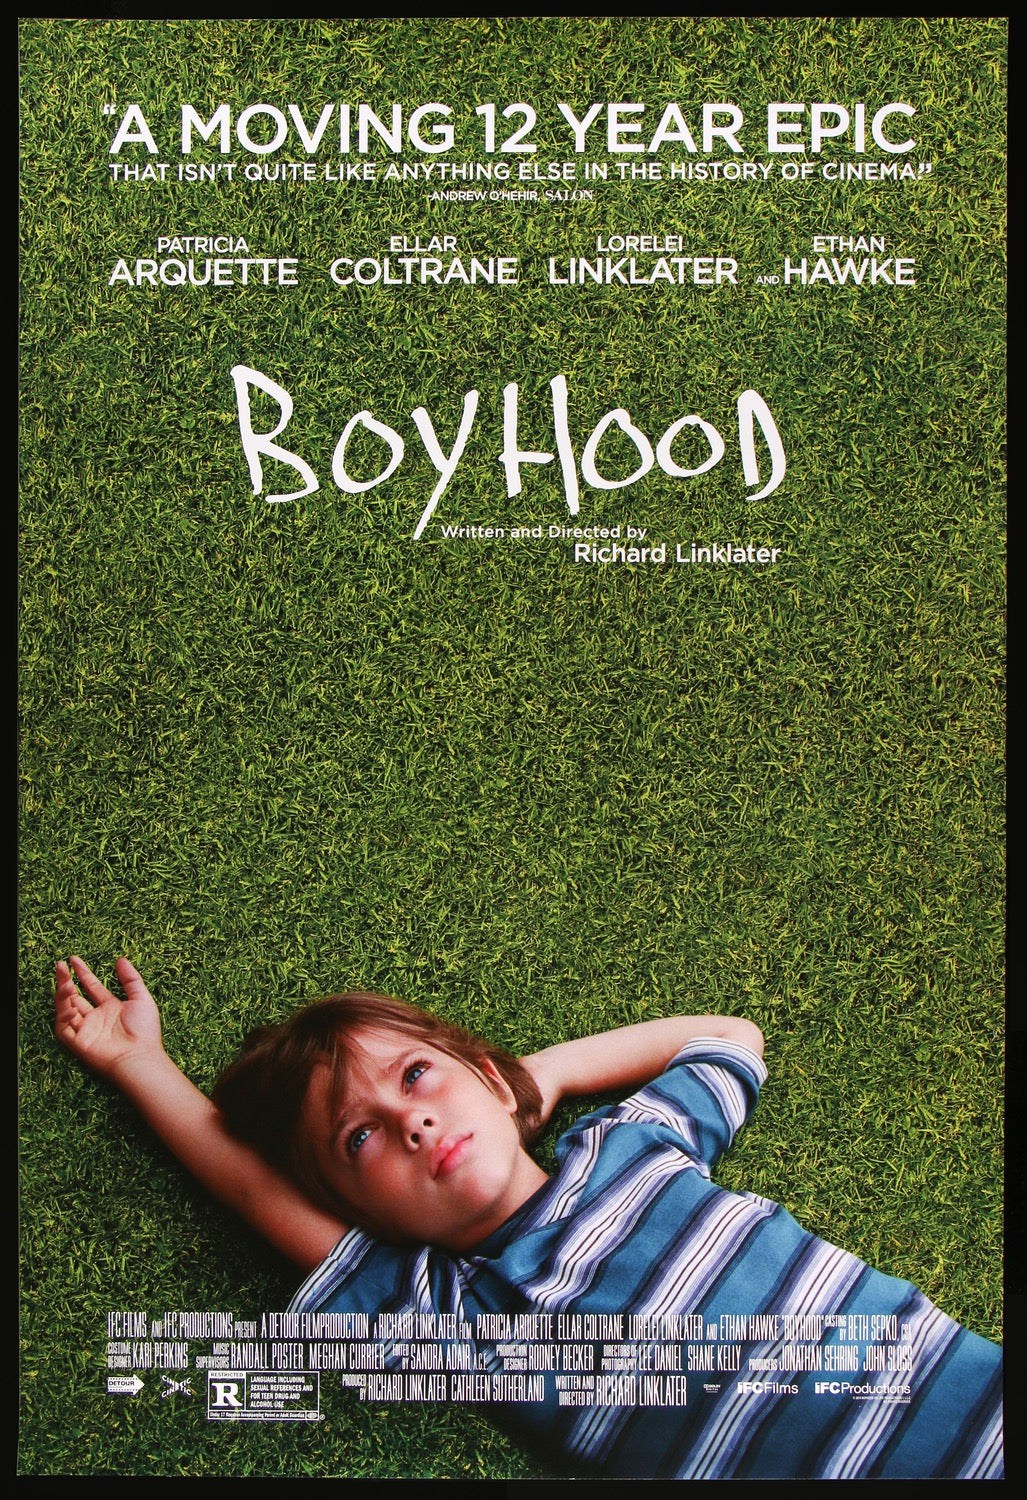 Boyhood (2014) original movie poster for sale at Original Film Art